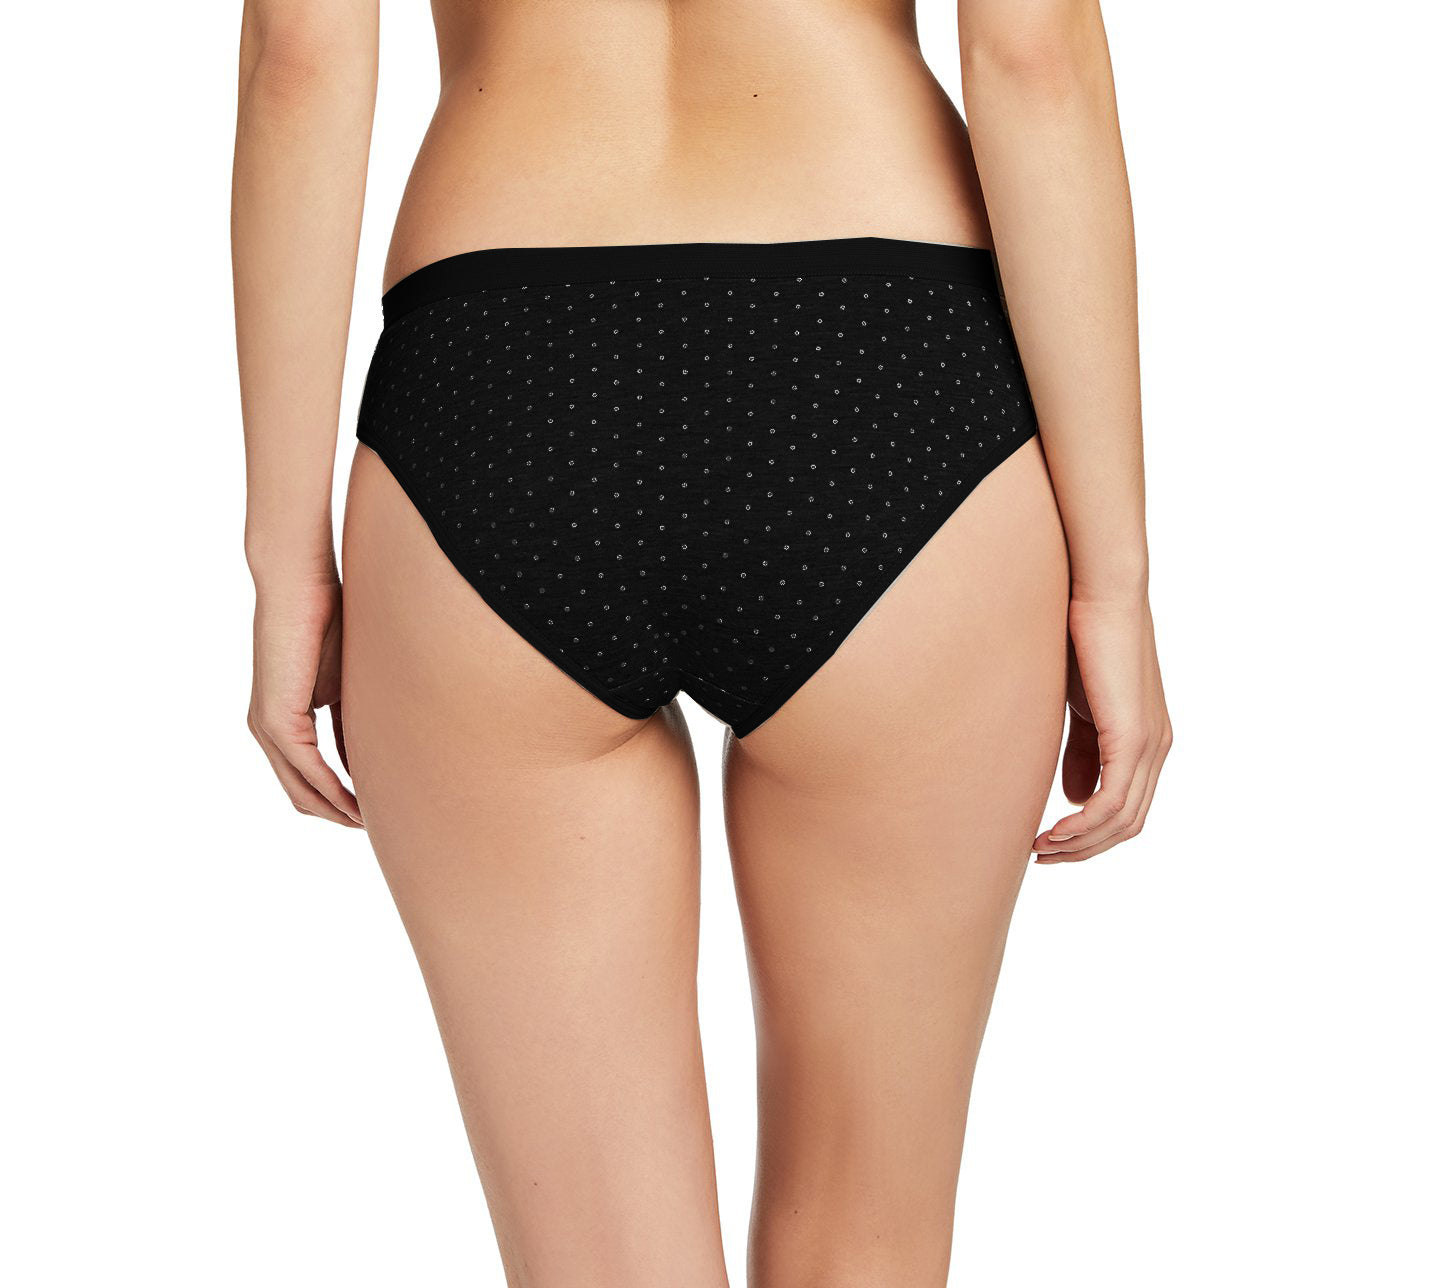 Nabtos Women's Cotton Underwear Bikini Polka Dot Black Panties (Pack of 6)